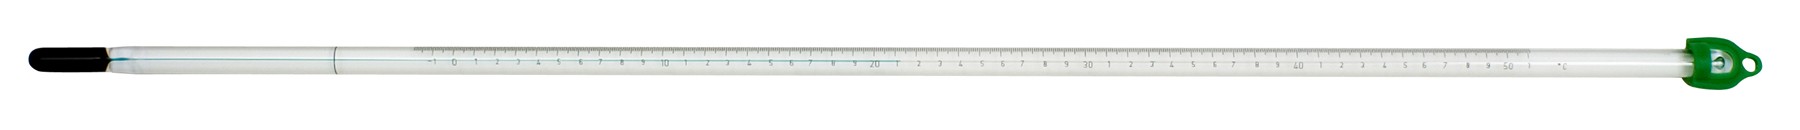 H-B DURAC Plus Precision Liquid-In-Glass Laboratory Thermometers, Organic Liquid Fill